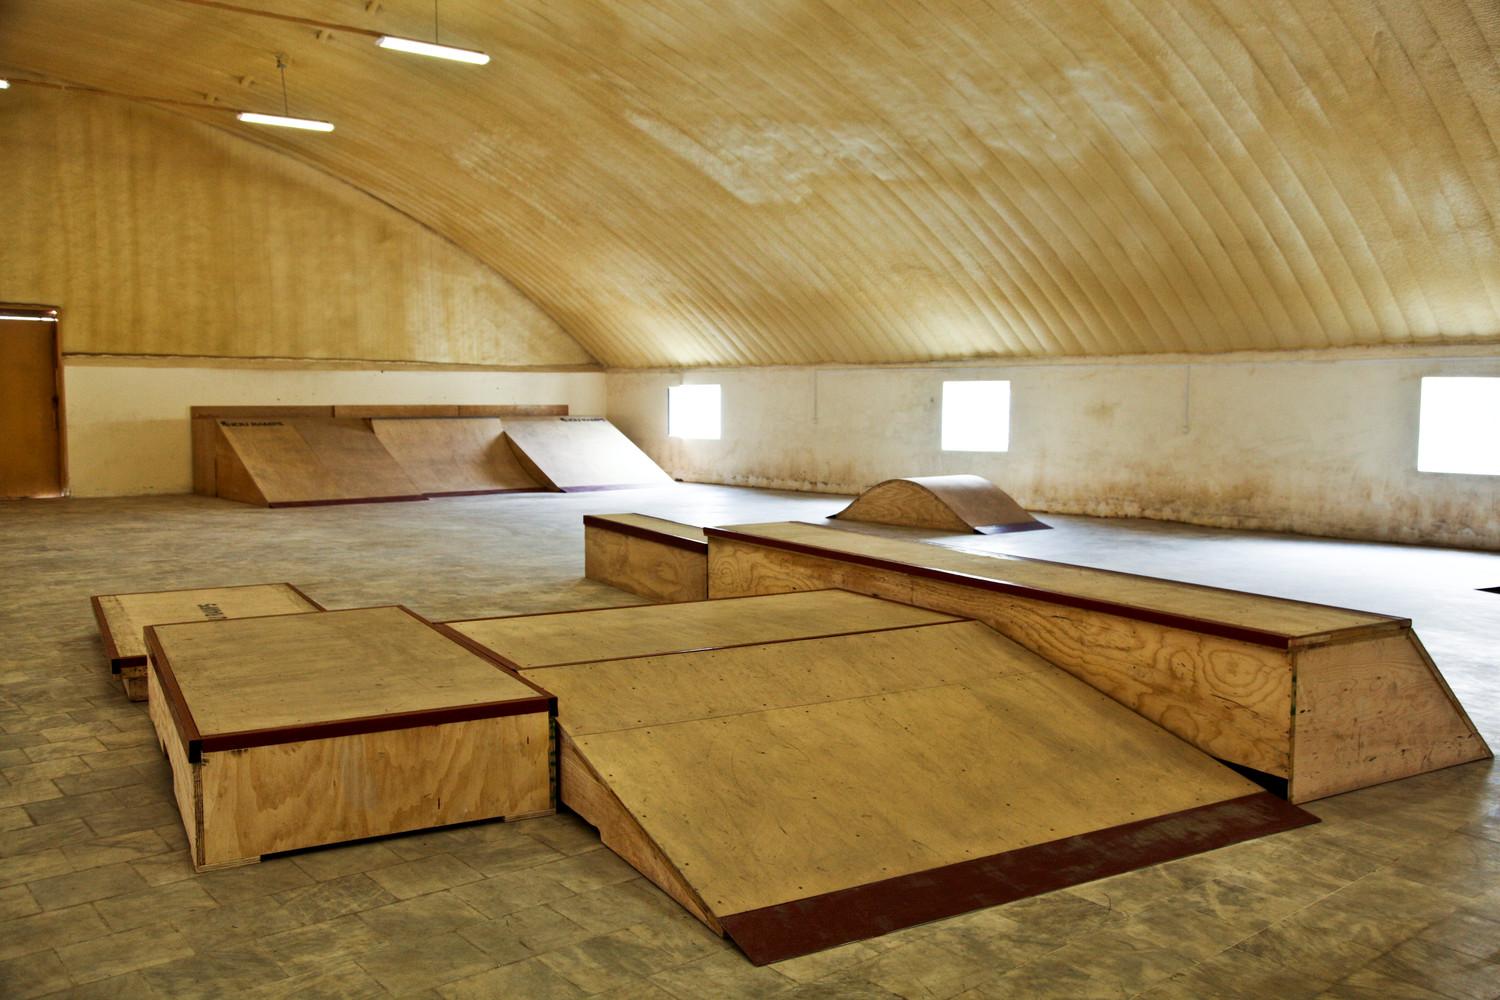 Internal view of skateboarding ramps